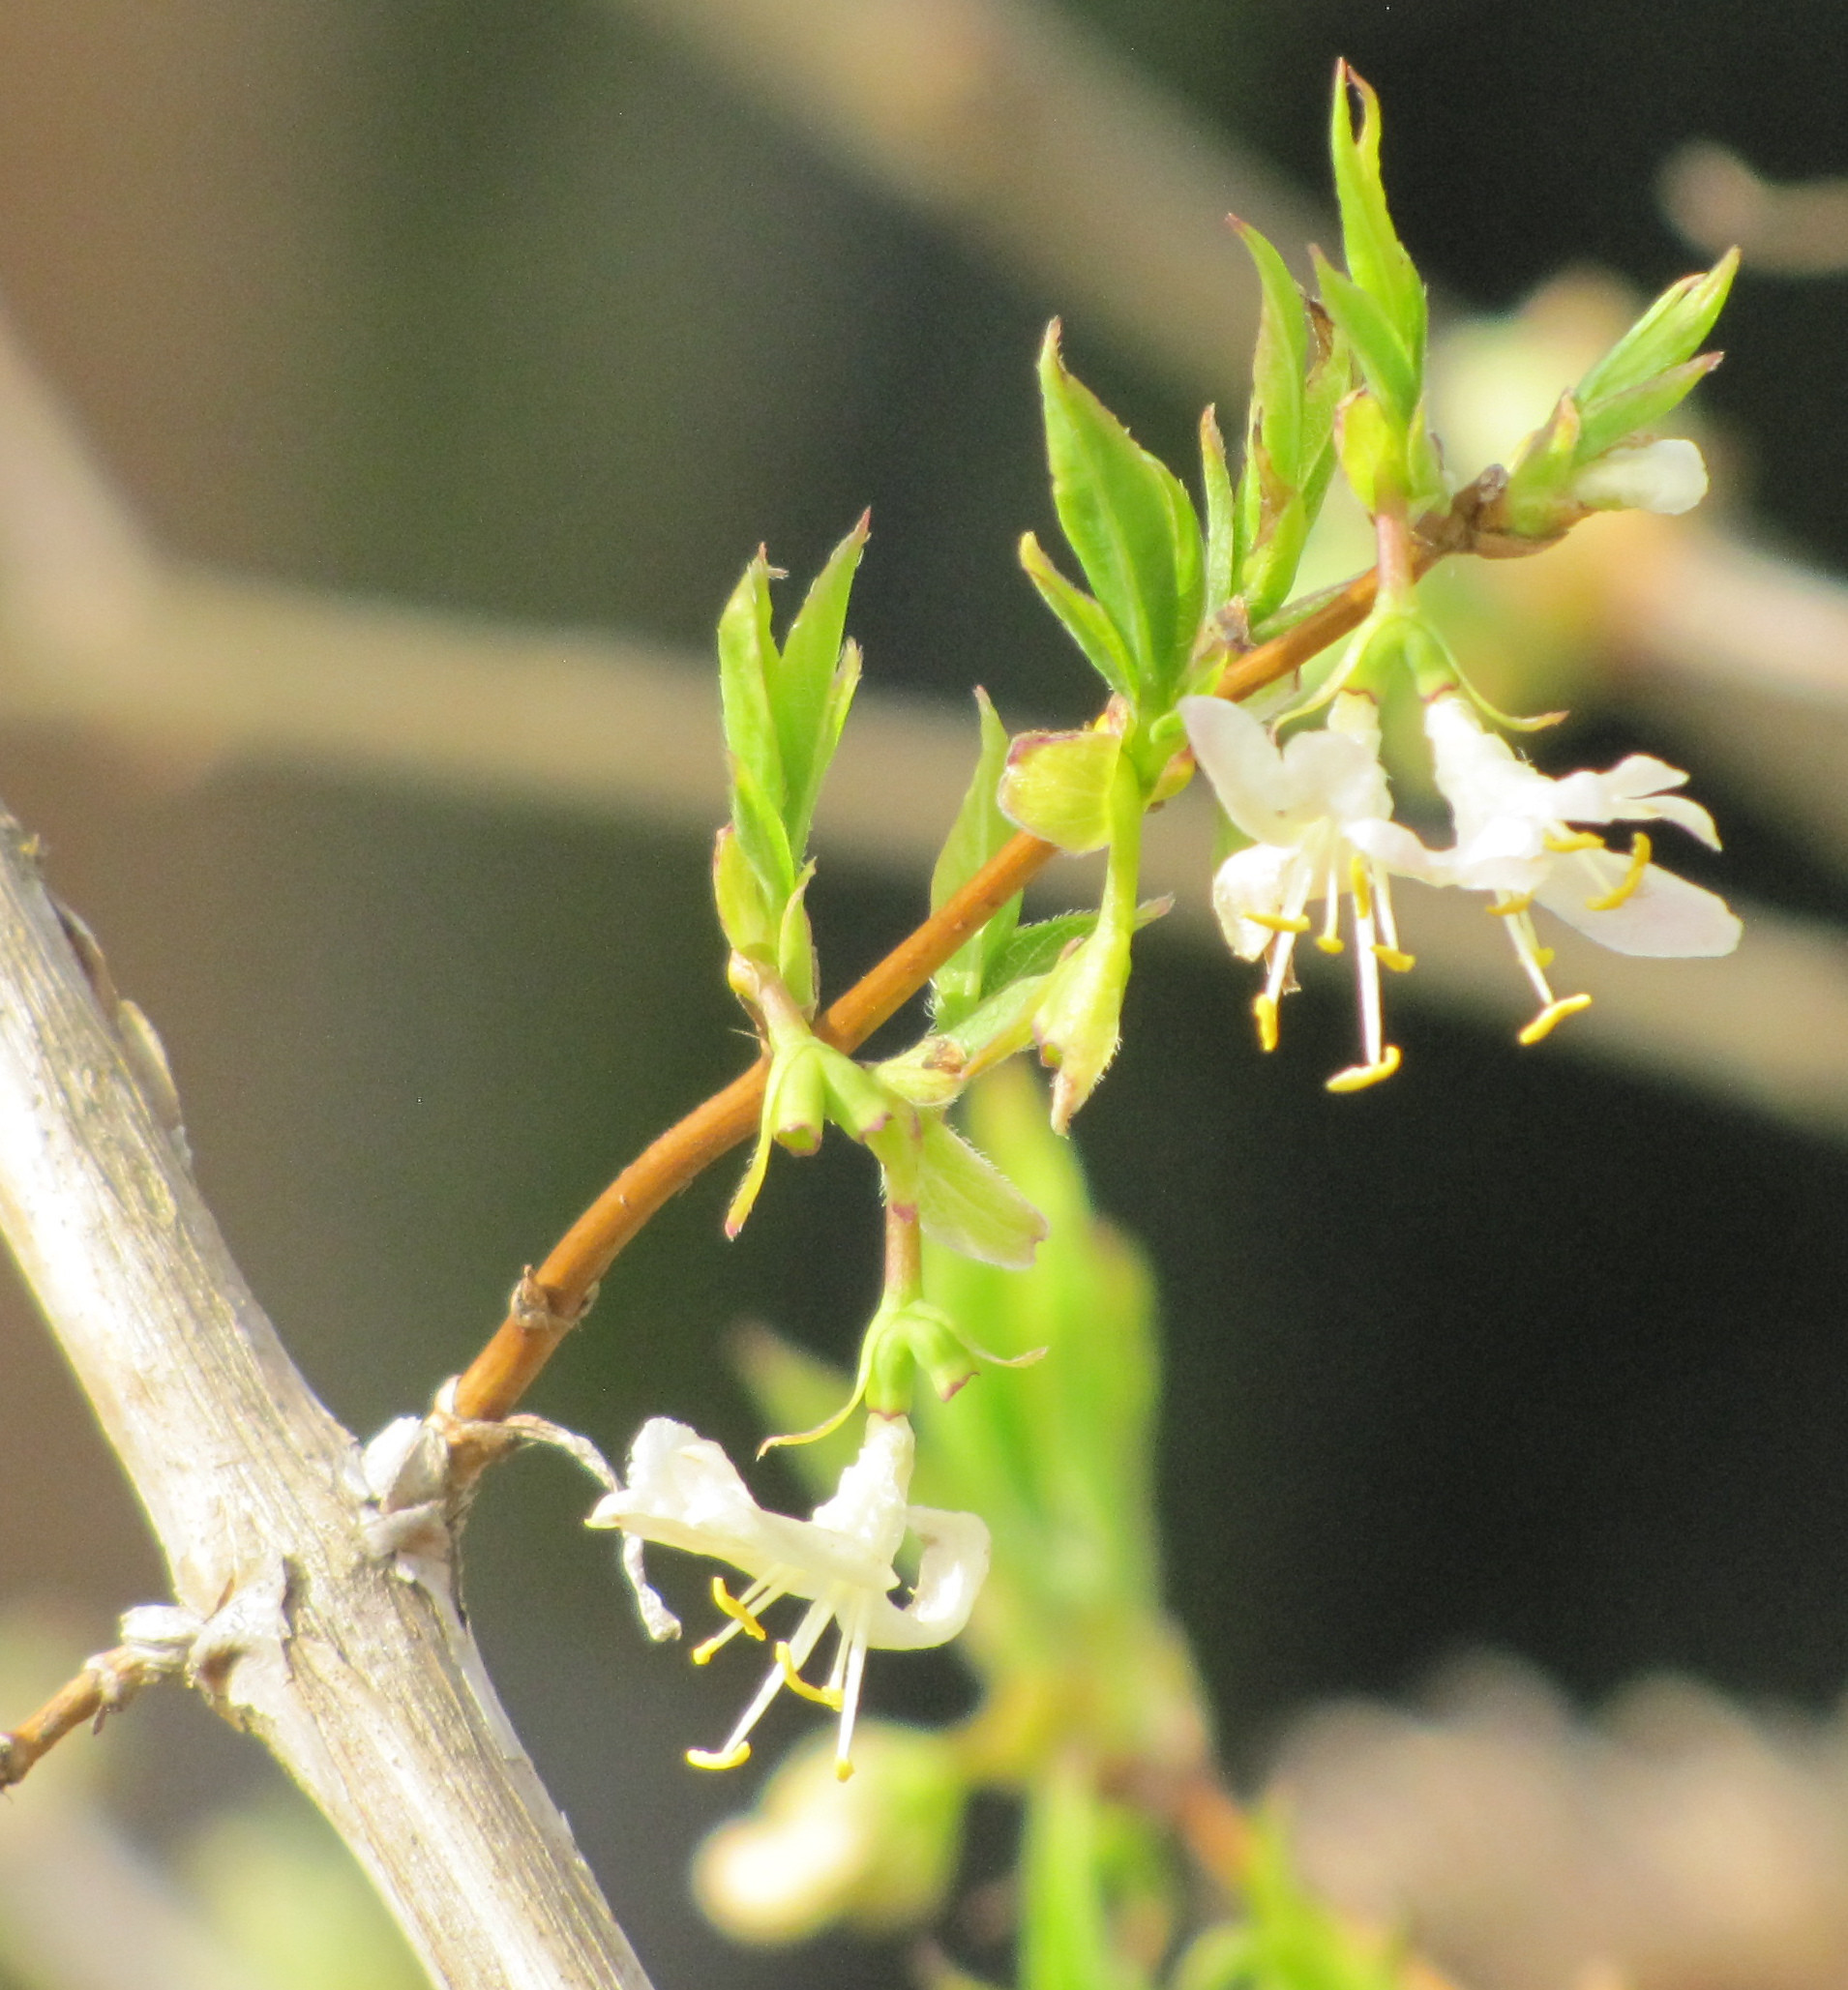 identification - Shrub with white flowers and lemon-jasmine scent ...